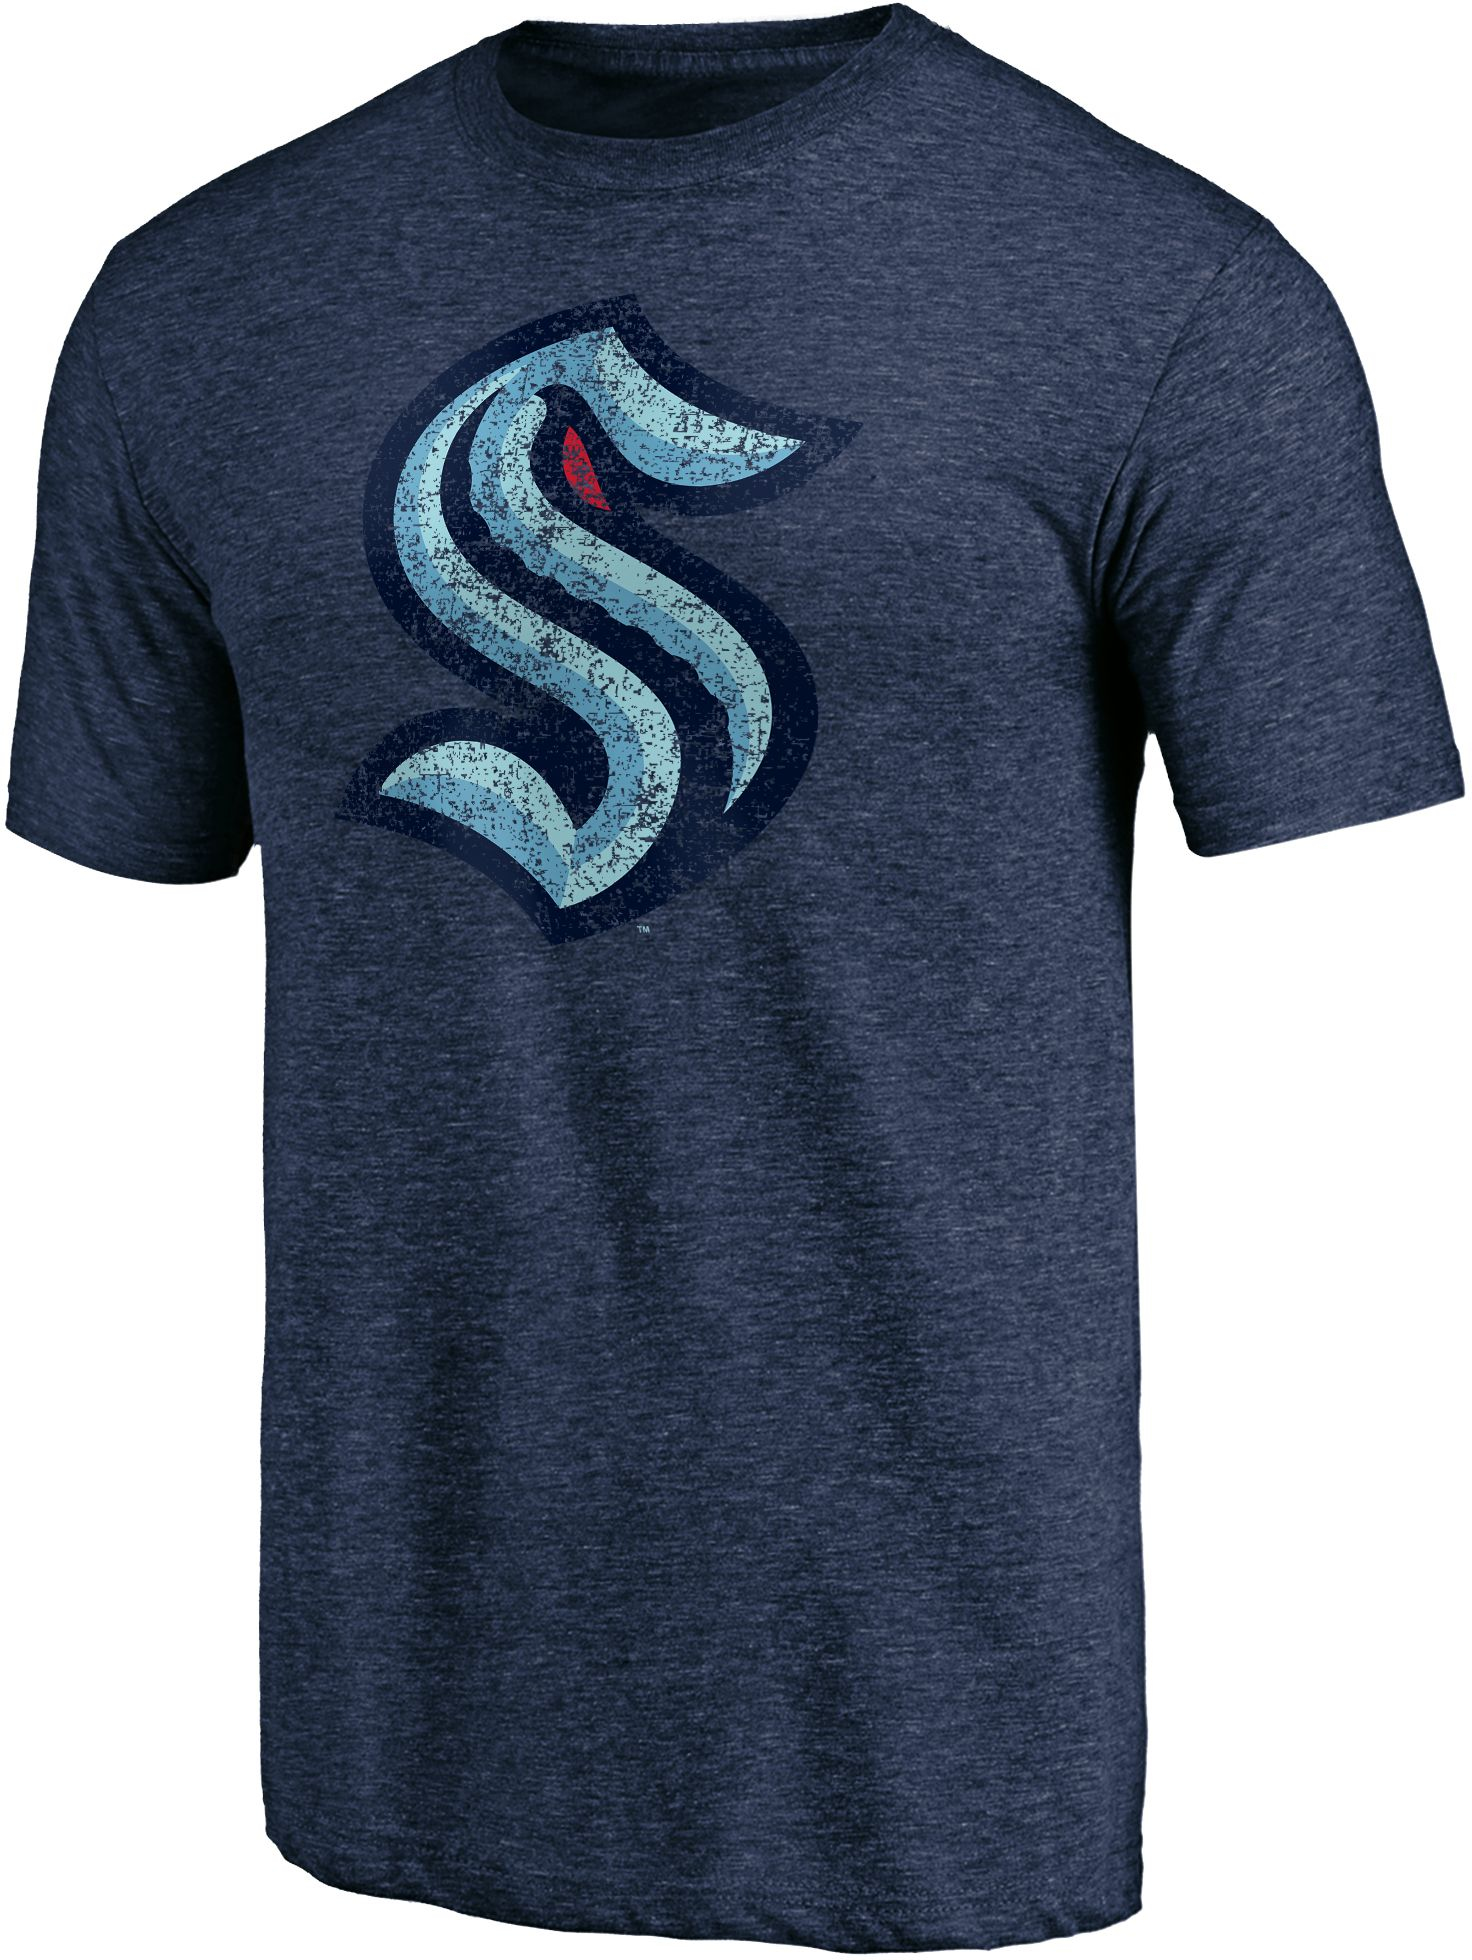 NHL Men's Seattle Kraken Distressed-Print Navy Logo T-Shirt, Small, Blue